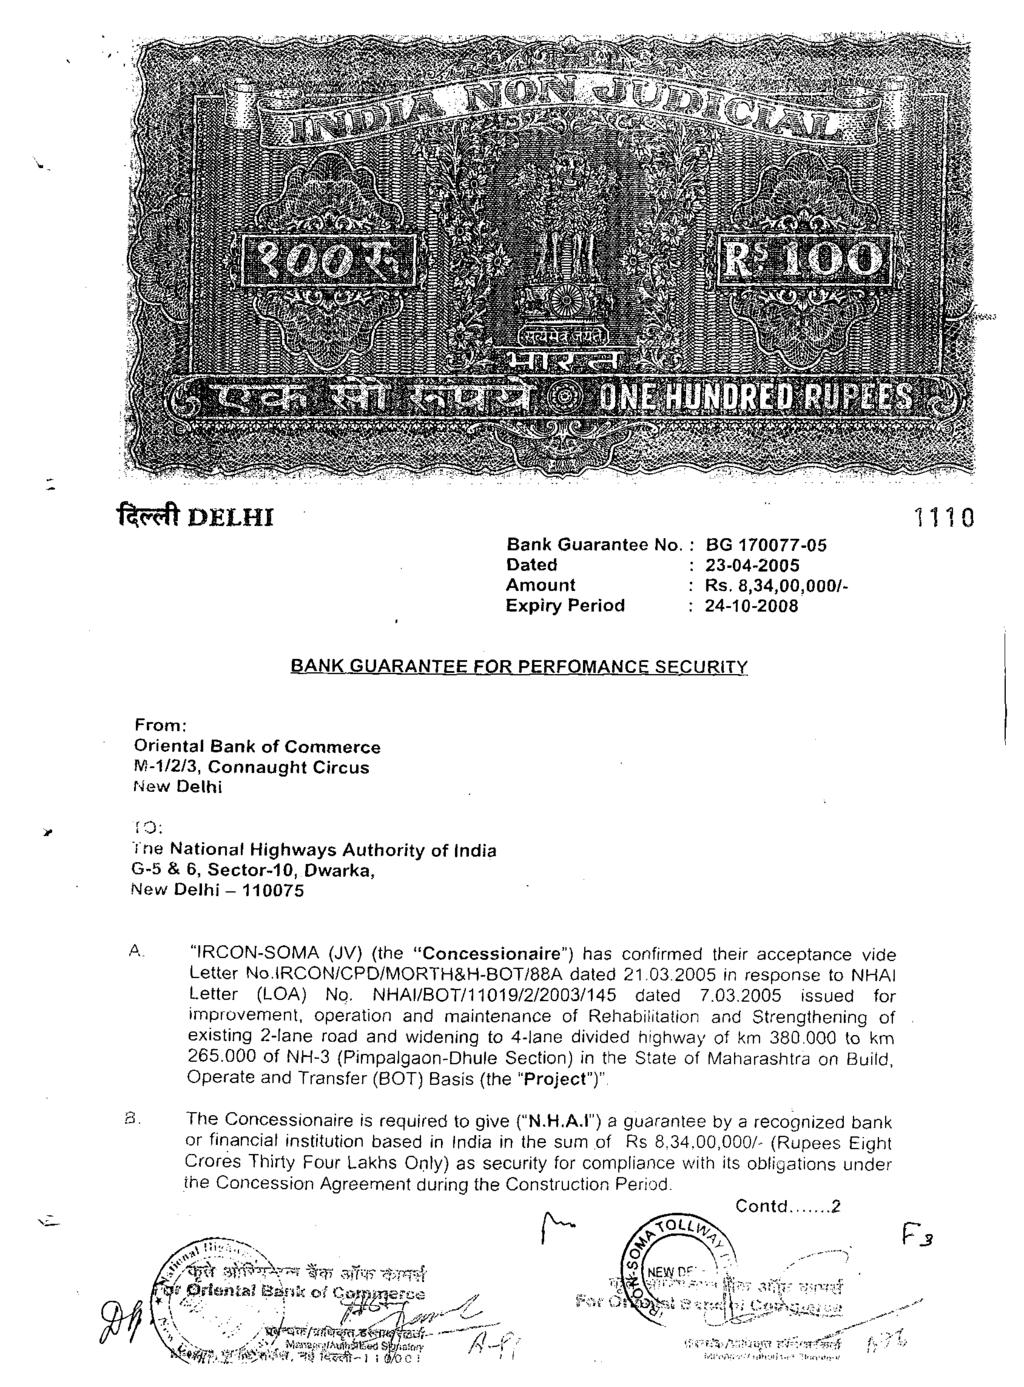 Bank Guarantee No. : BG 170077-05 Dated : 23-04-2005 Amount : Rs.